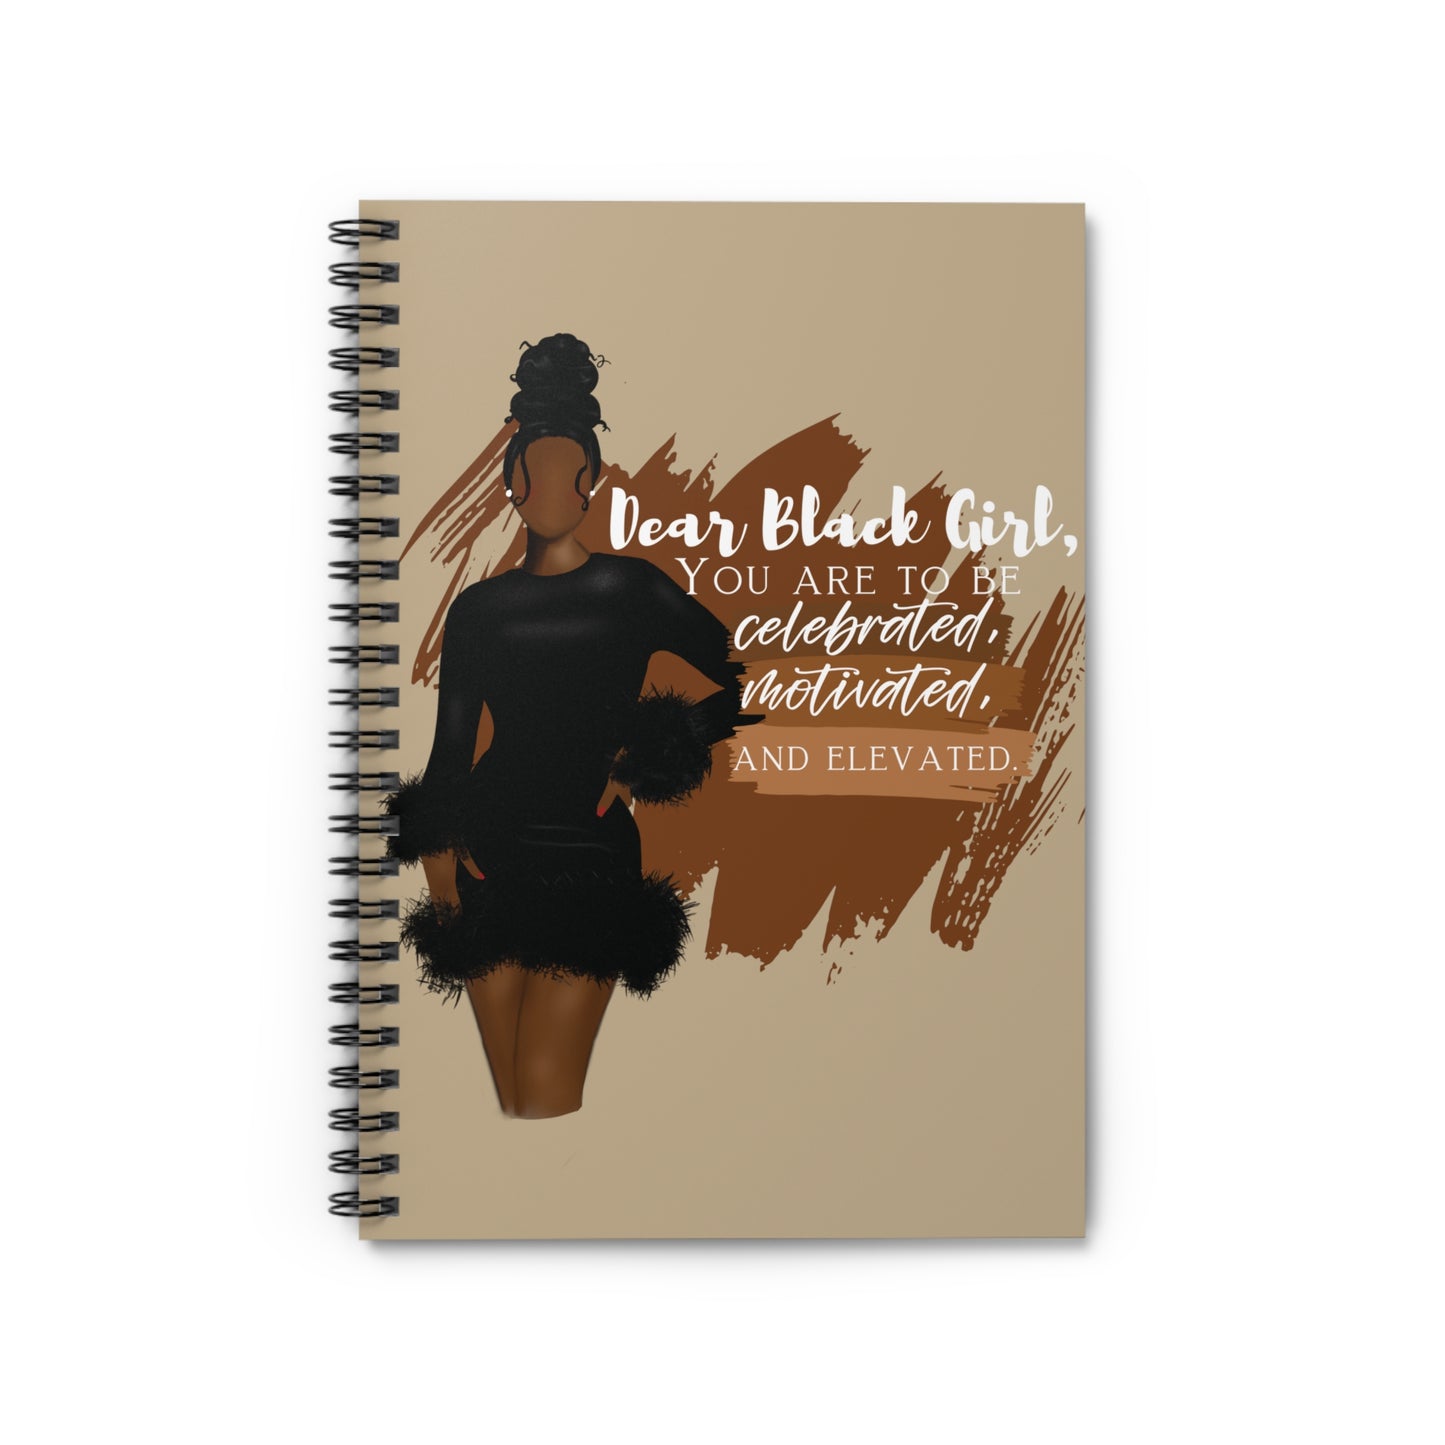 Dear Black Girl Spiral Notebook - Ruled Line